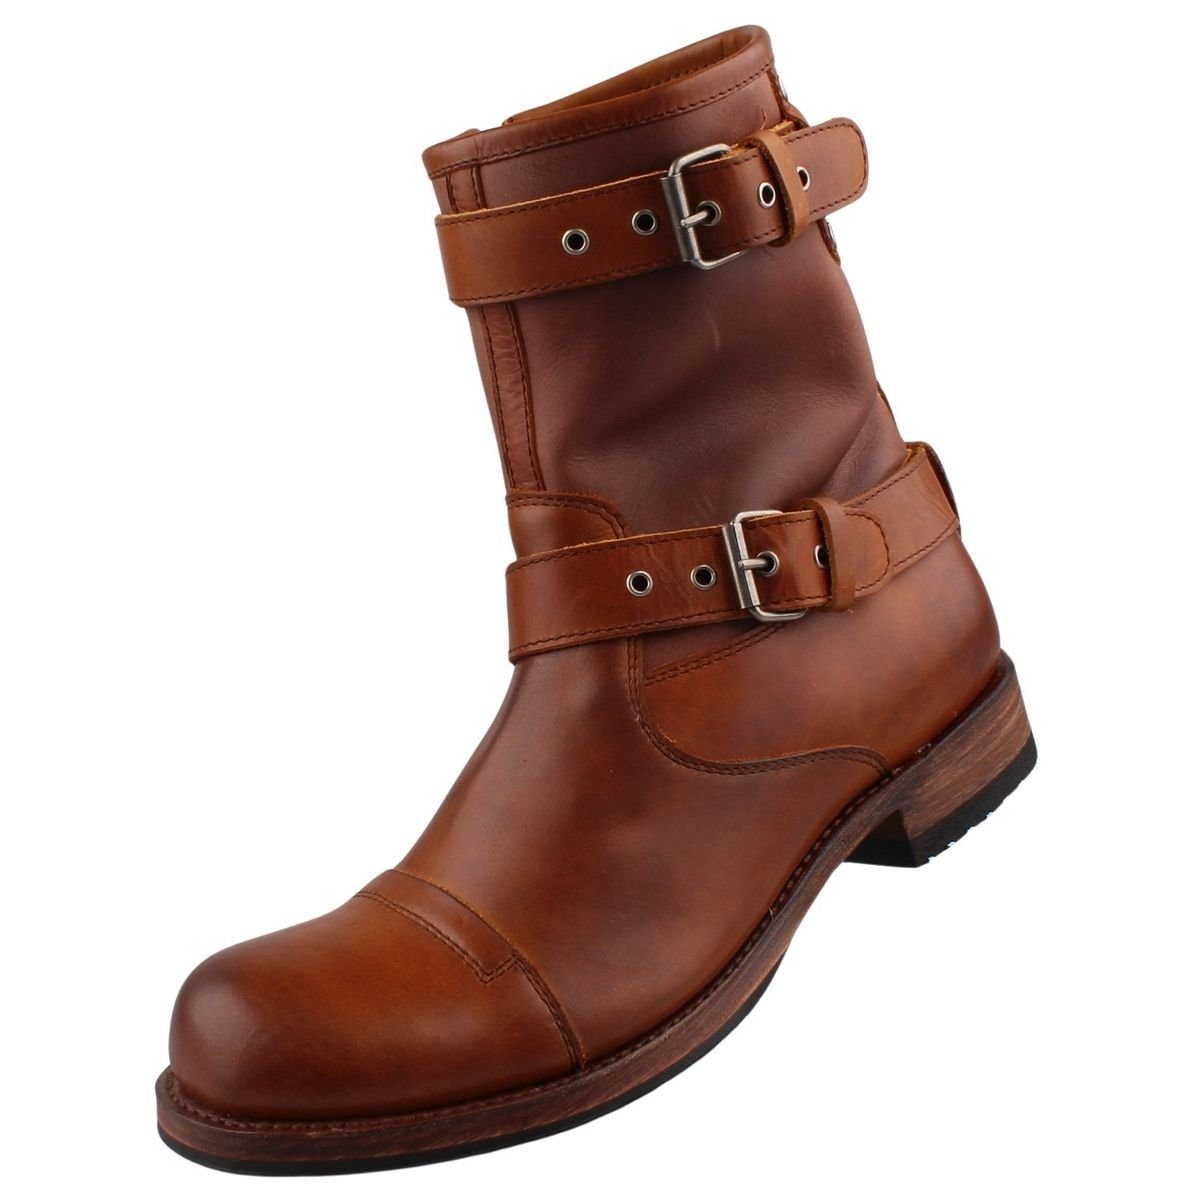 Sendra Boots 11240-Evolution Tang US Marron Stiefel